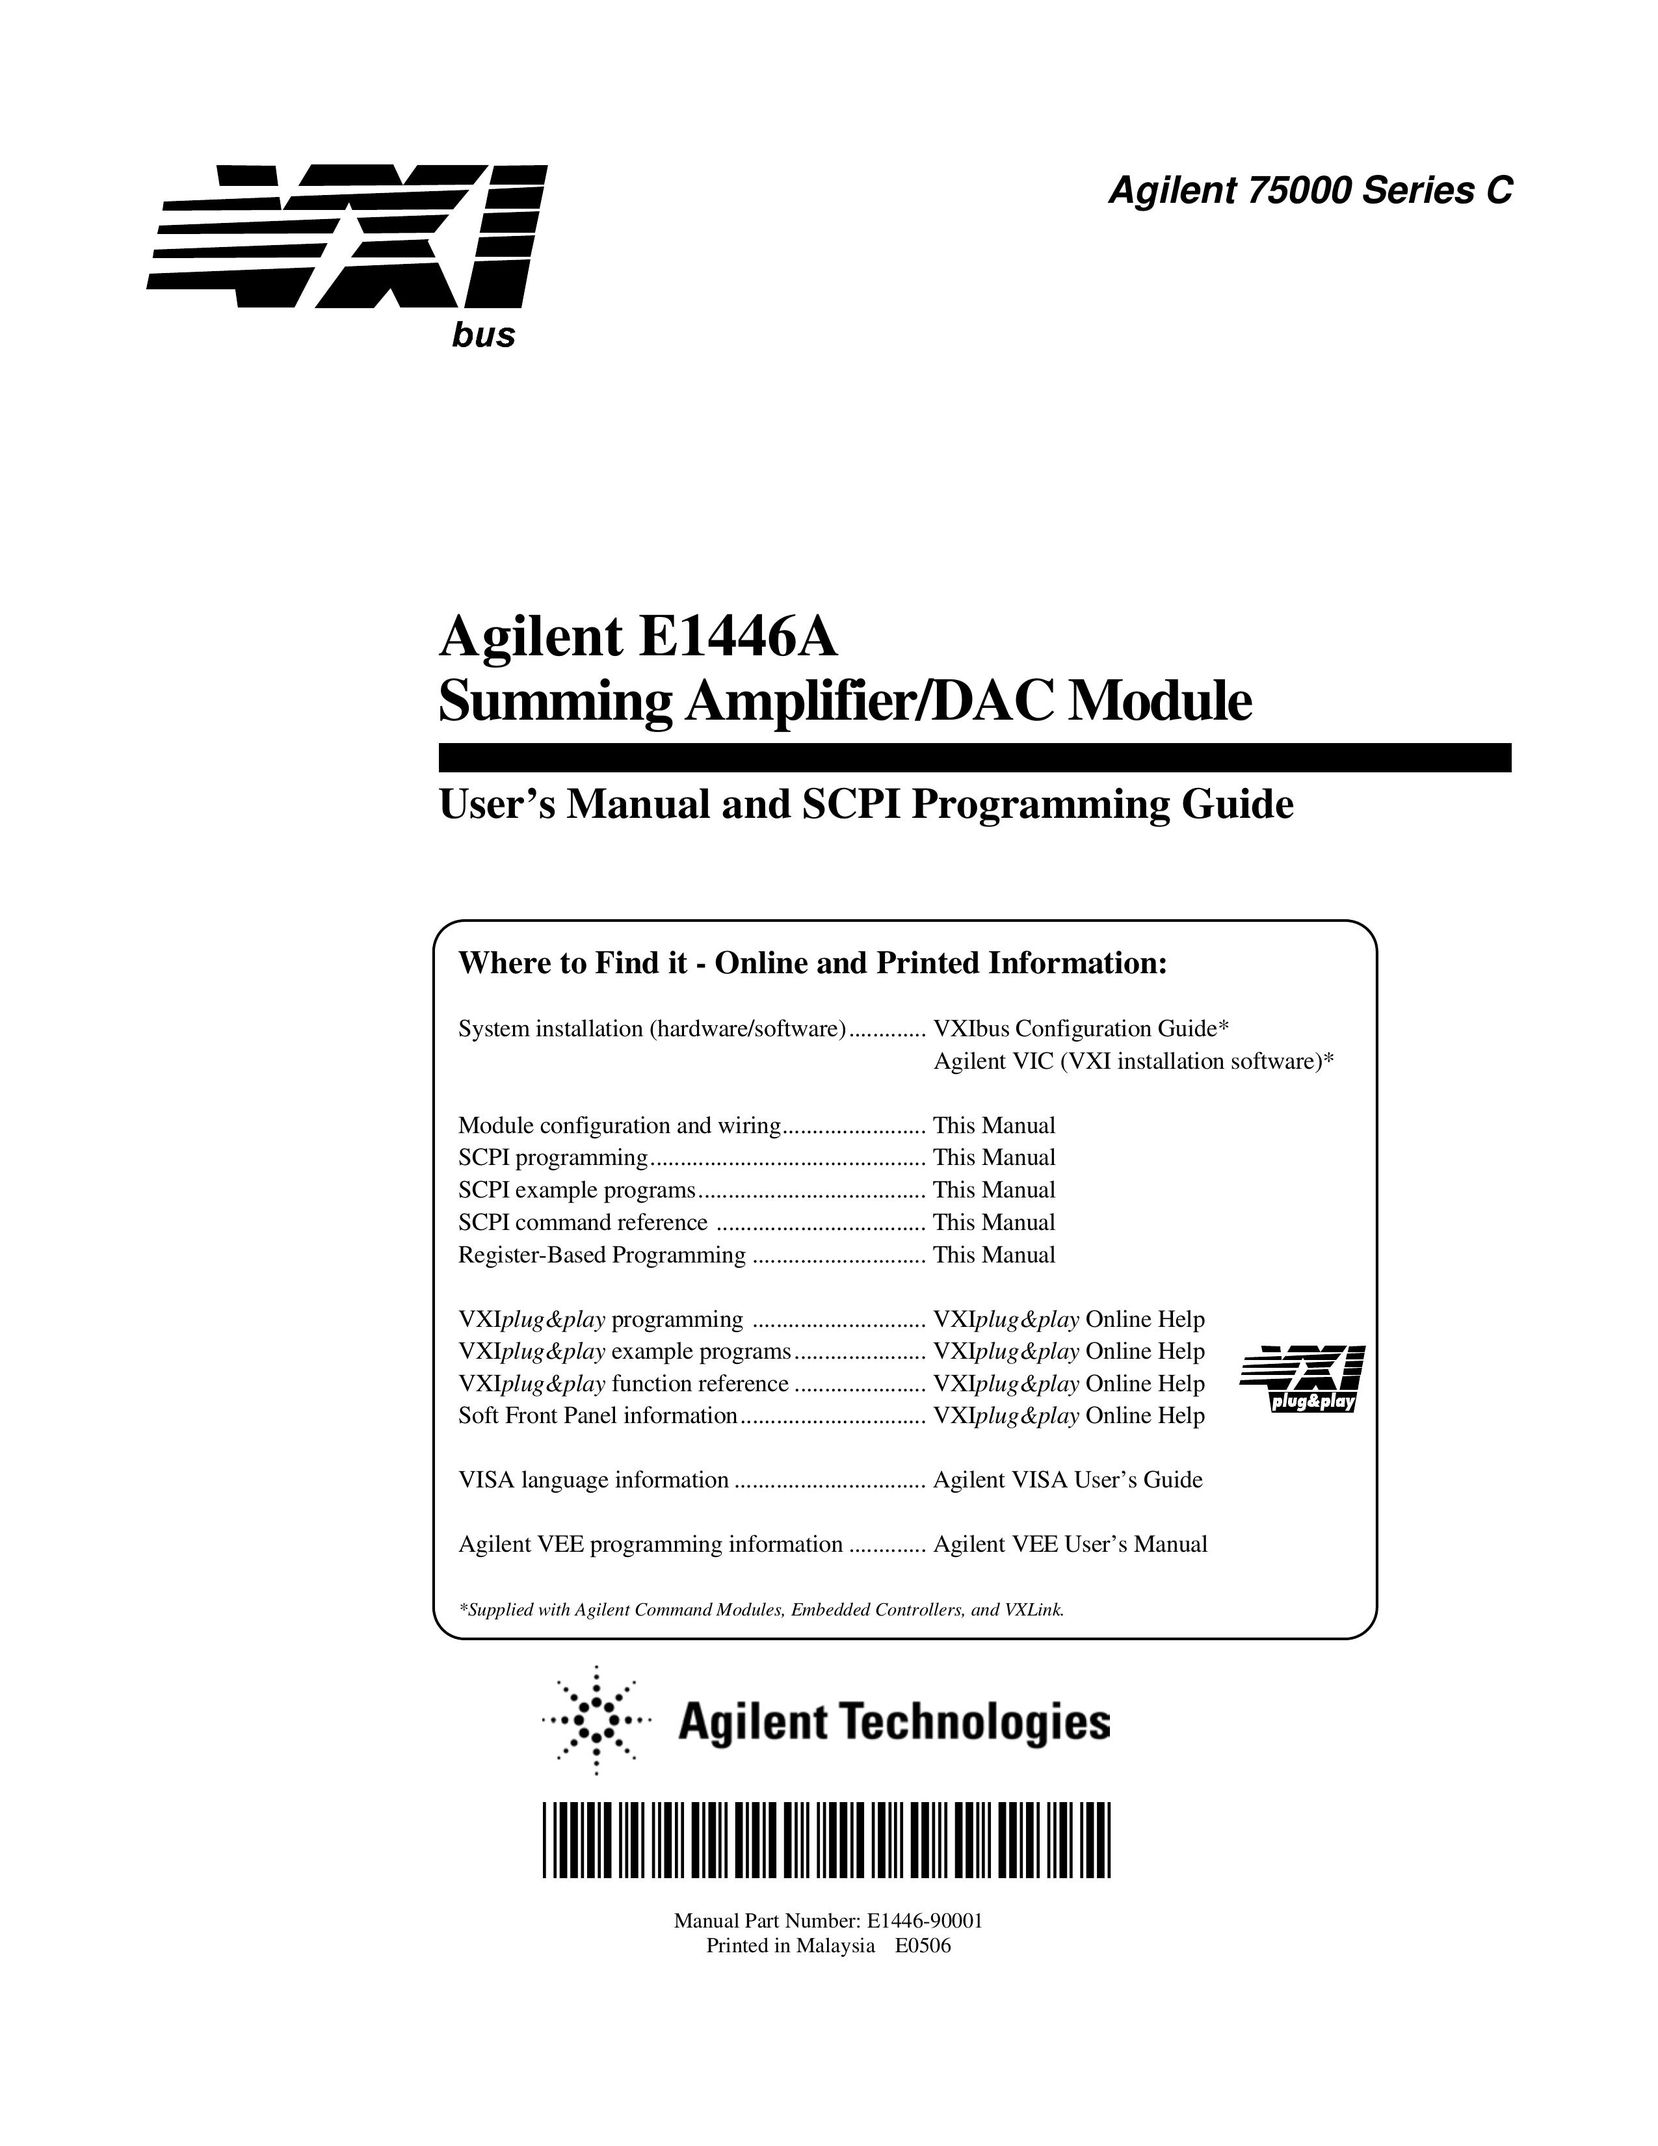 Agilent Technologies E1446A Car Amplifier User Manual